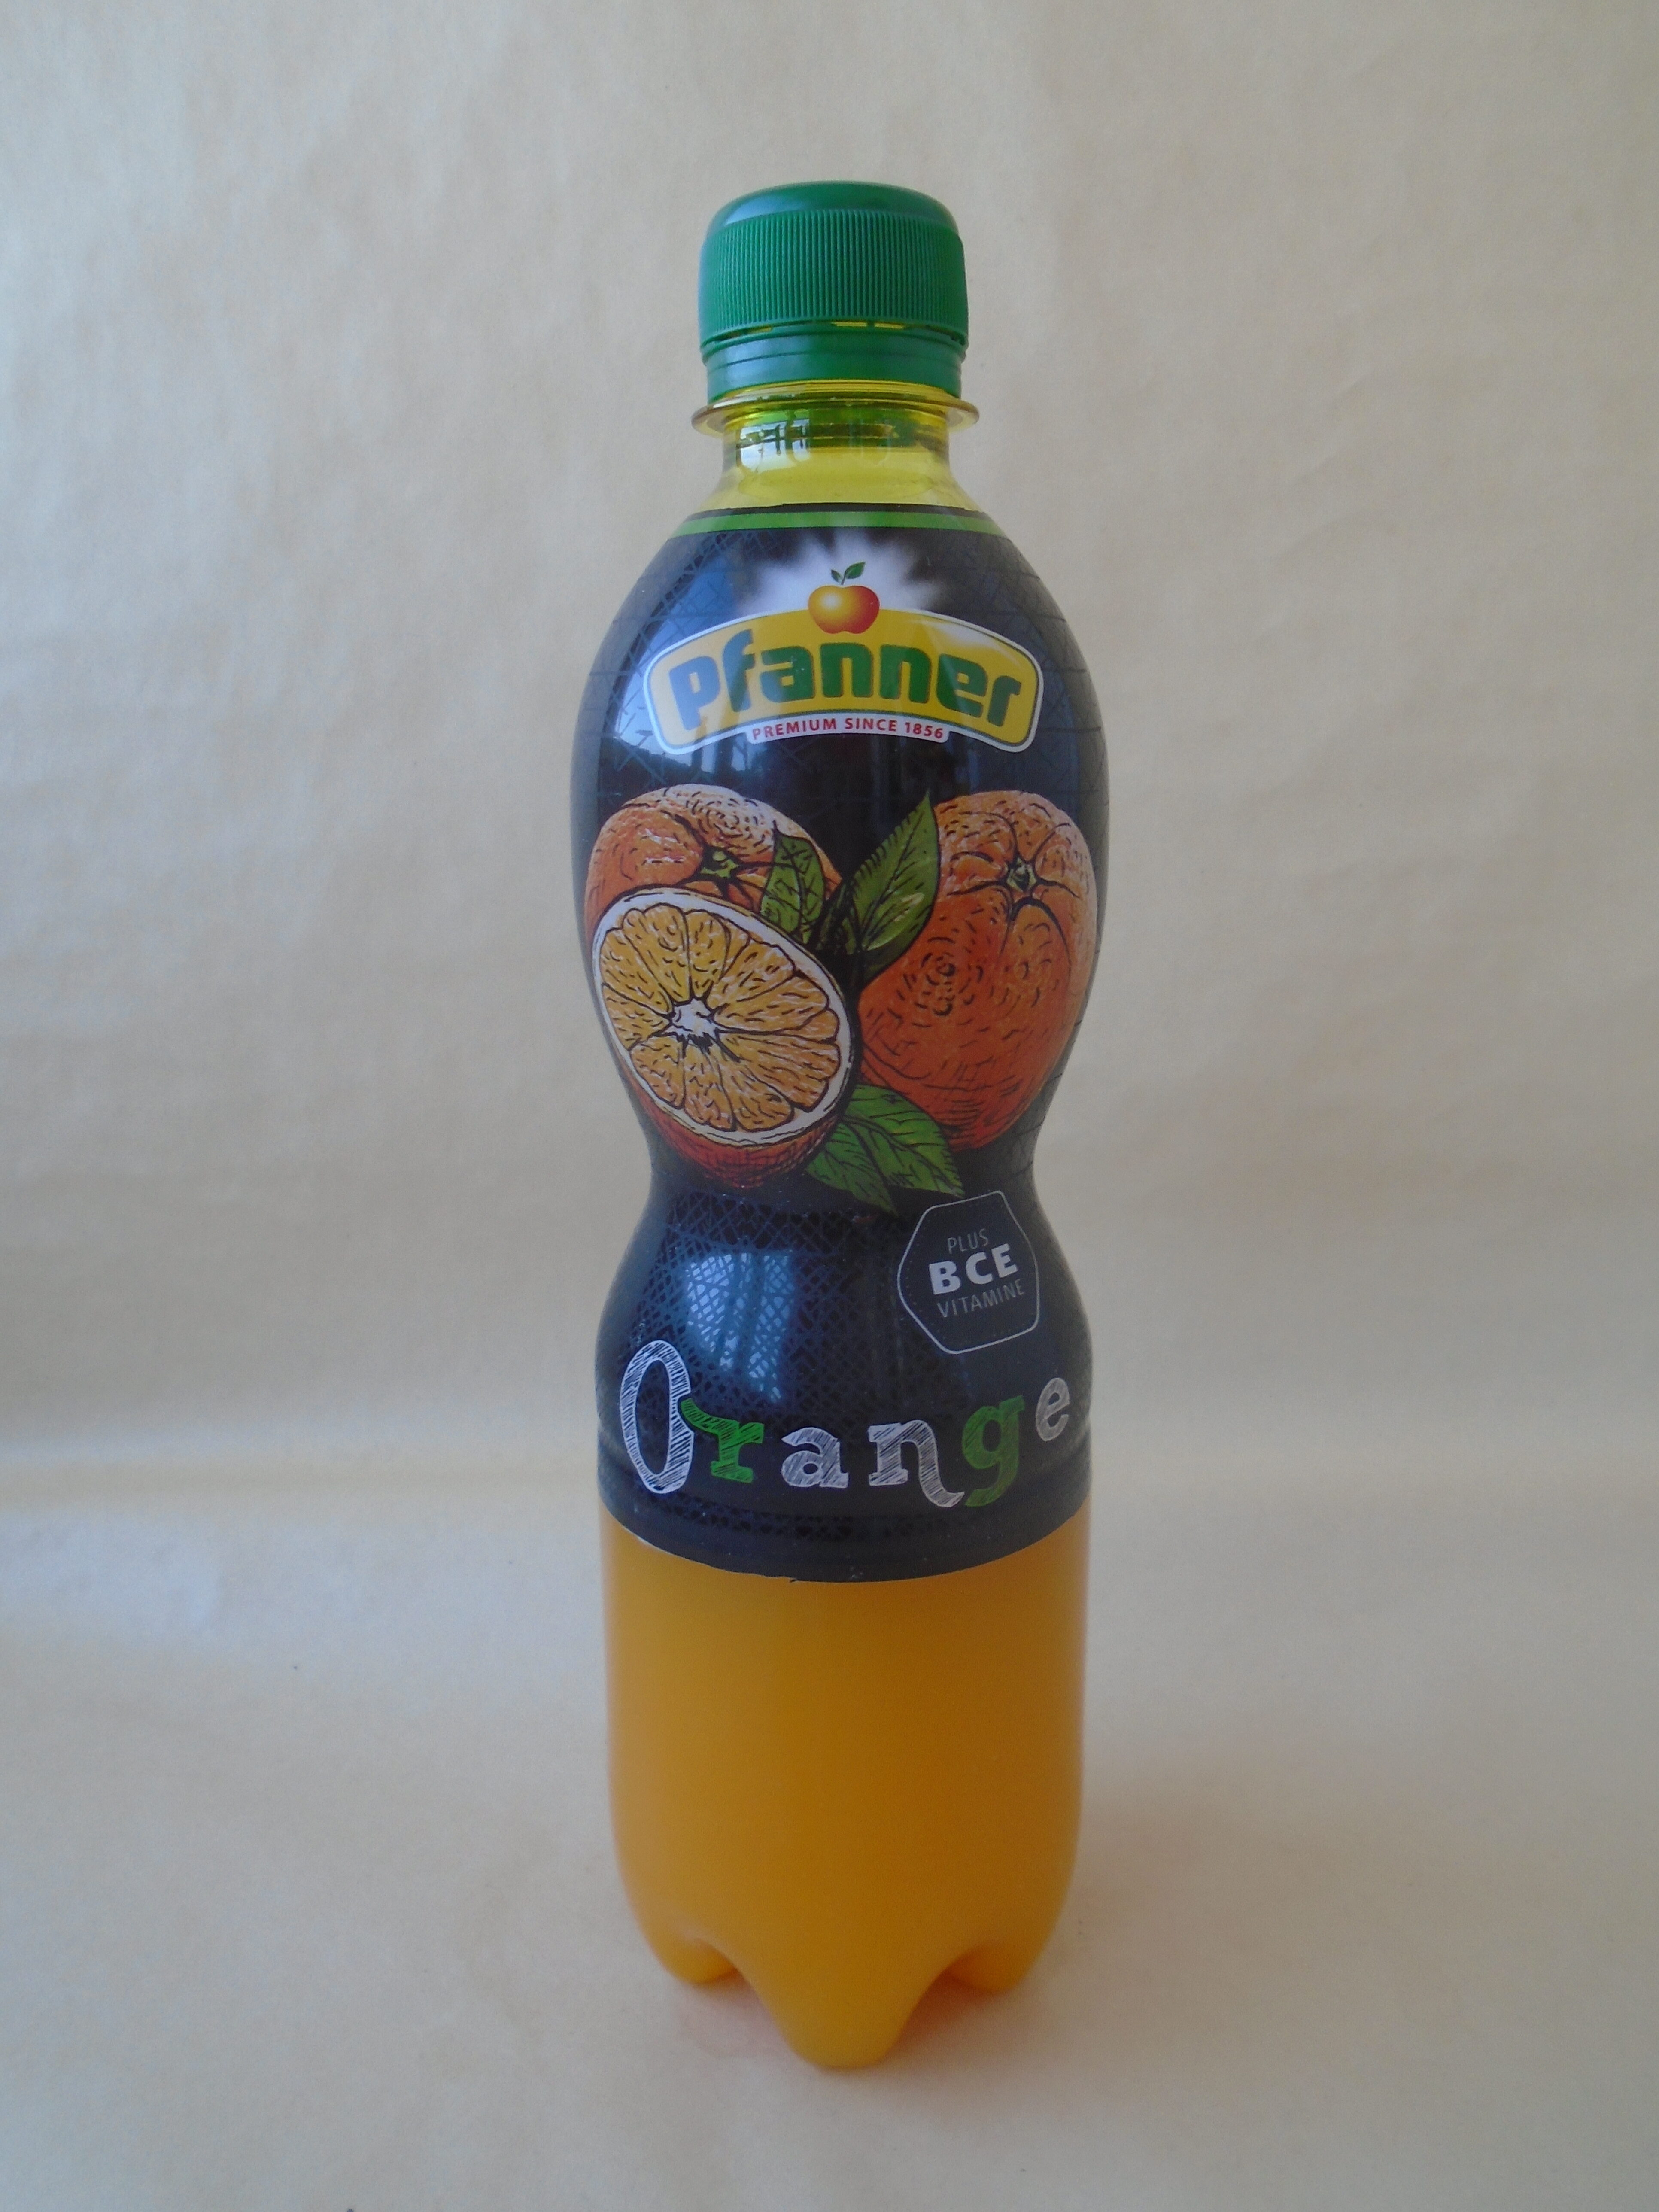 Portocale orange - Product - ro